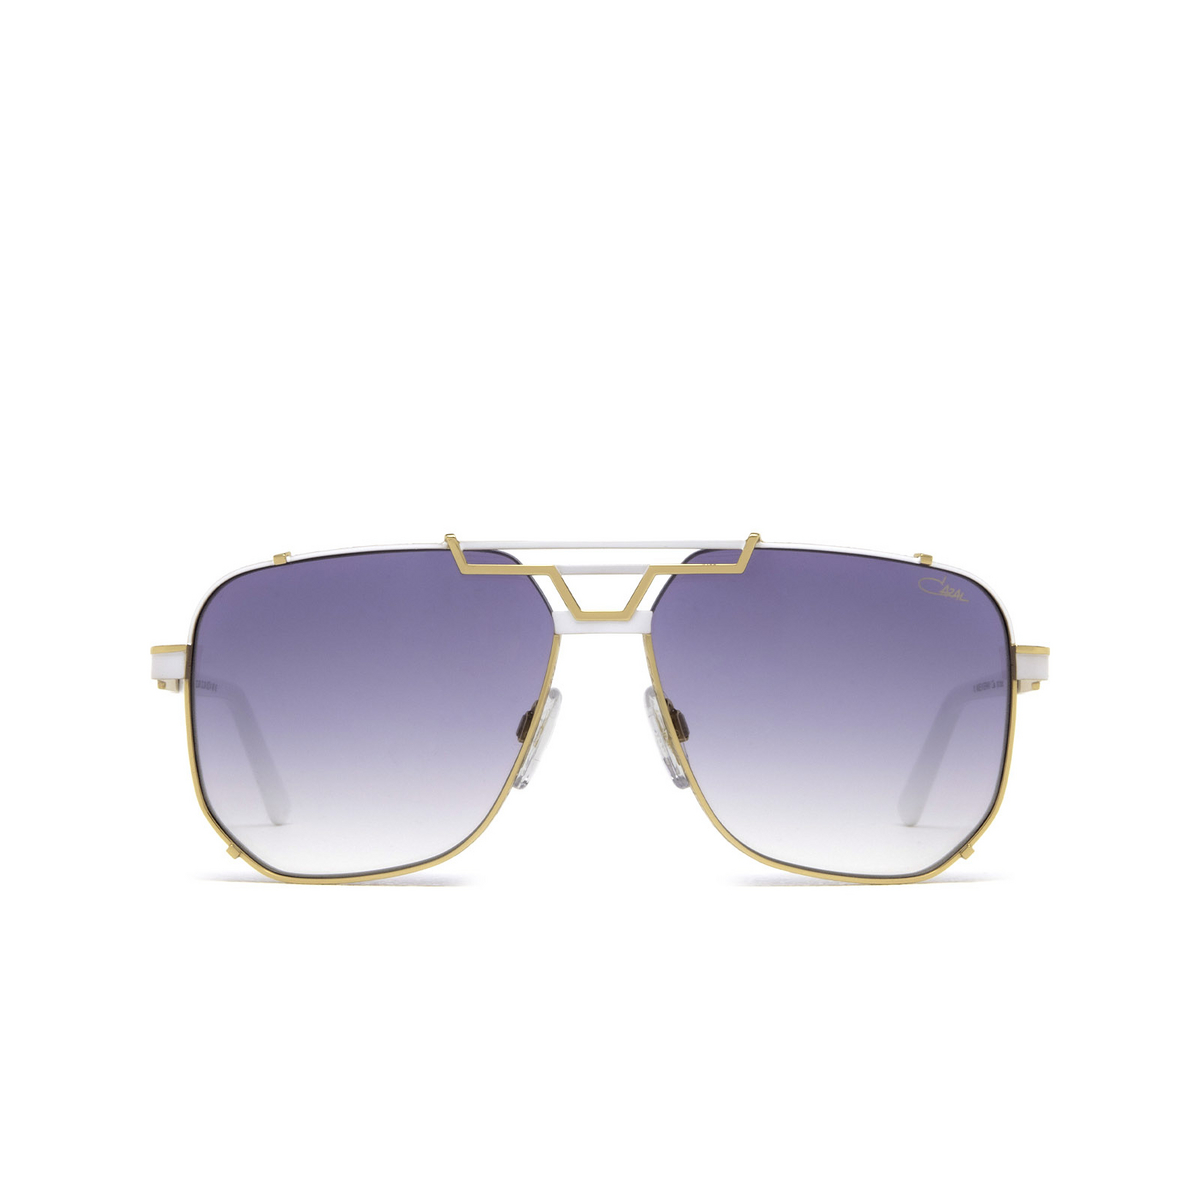 Cazal 9090 Sunglasses 004 Gold - Cream - front view